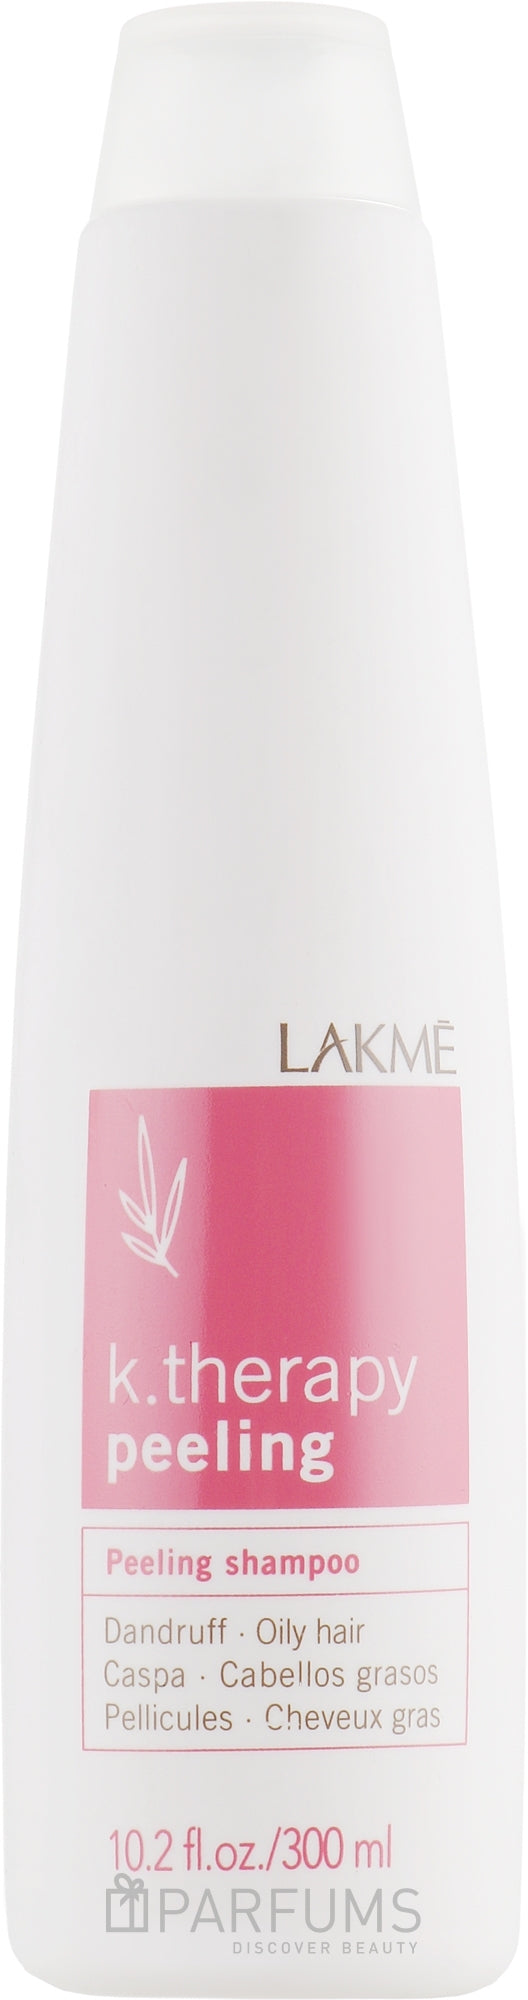 Lakme K. Therapy Peeling Shampoo Oily Hair - 300ml